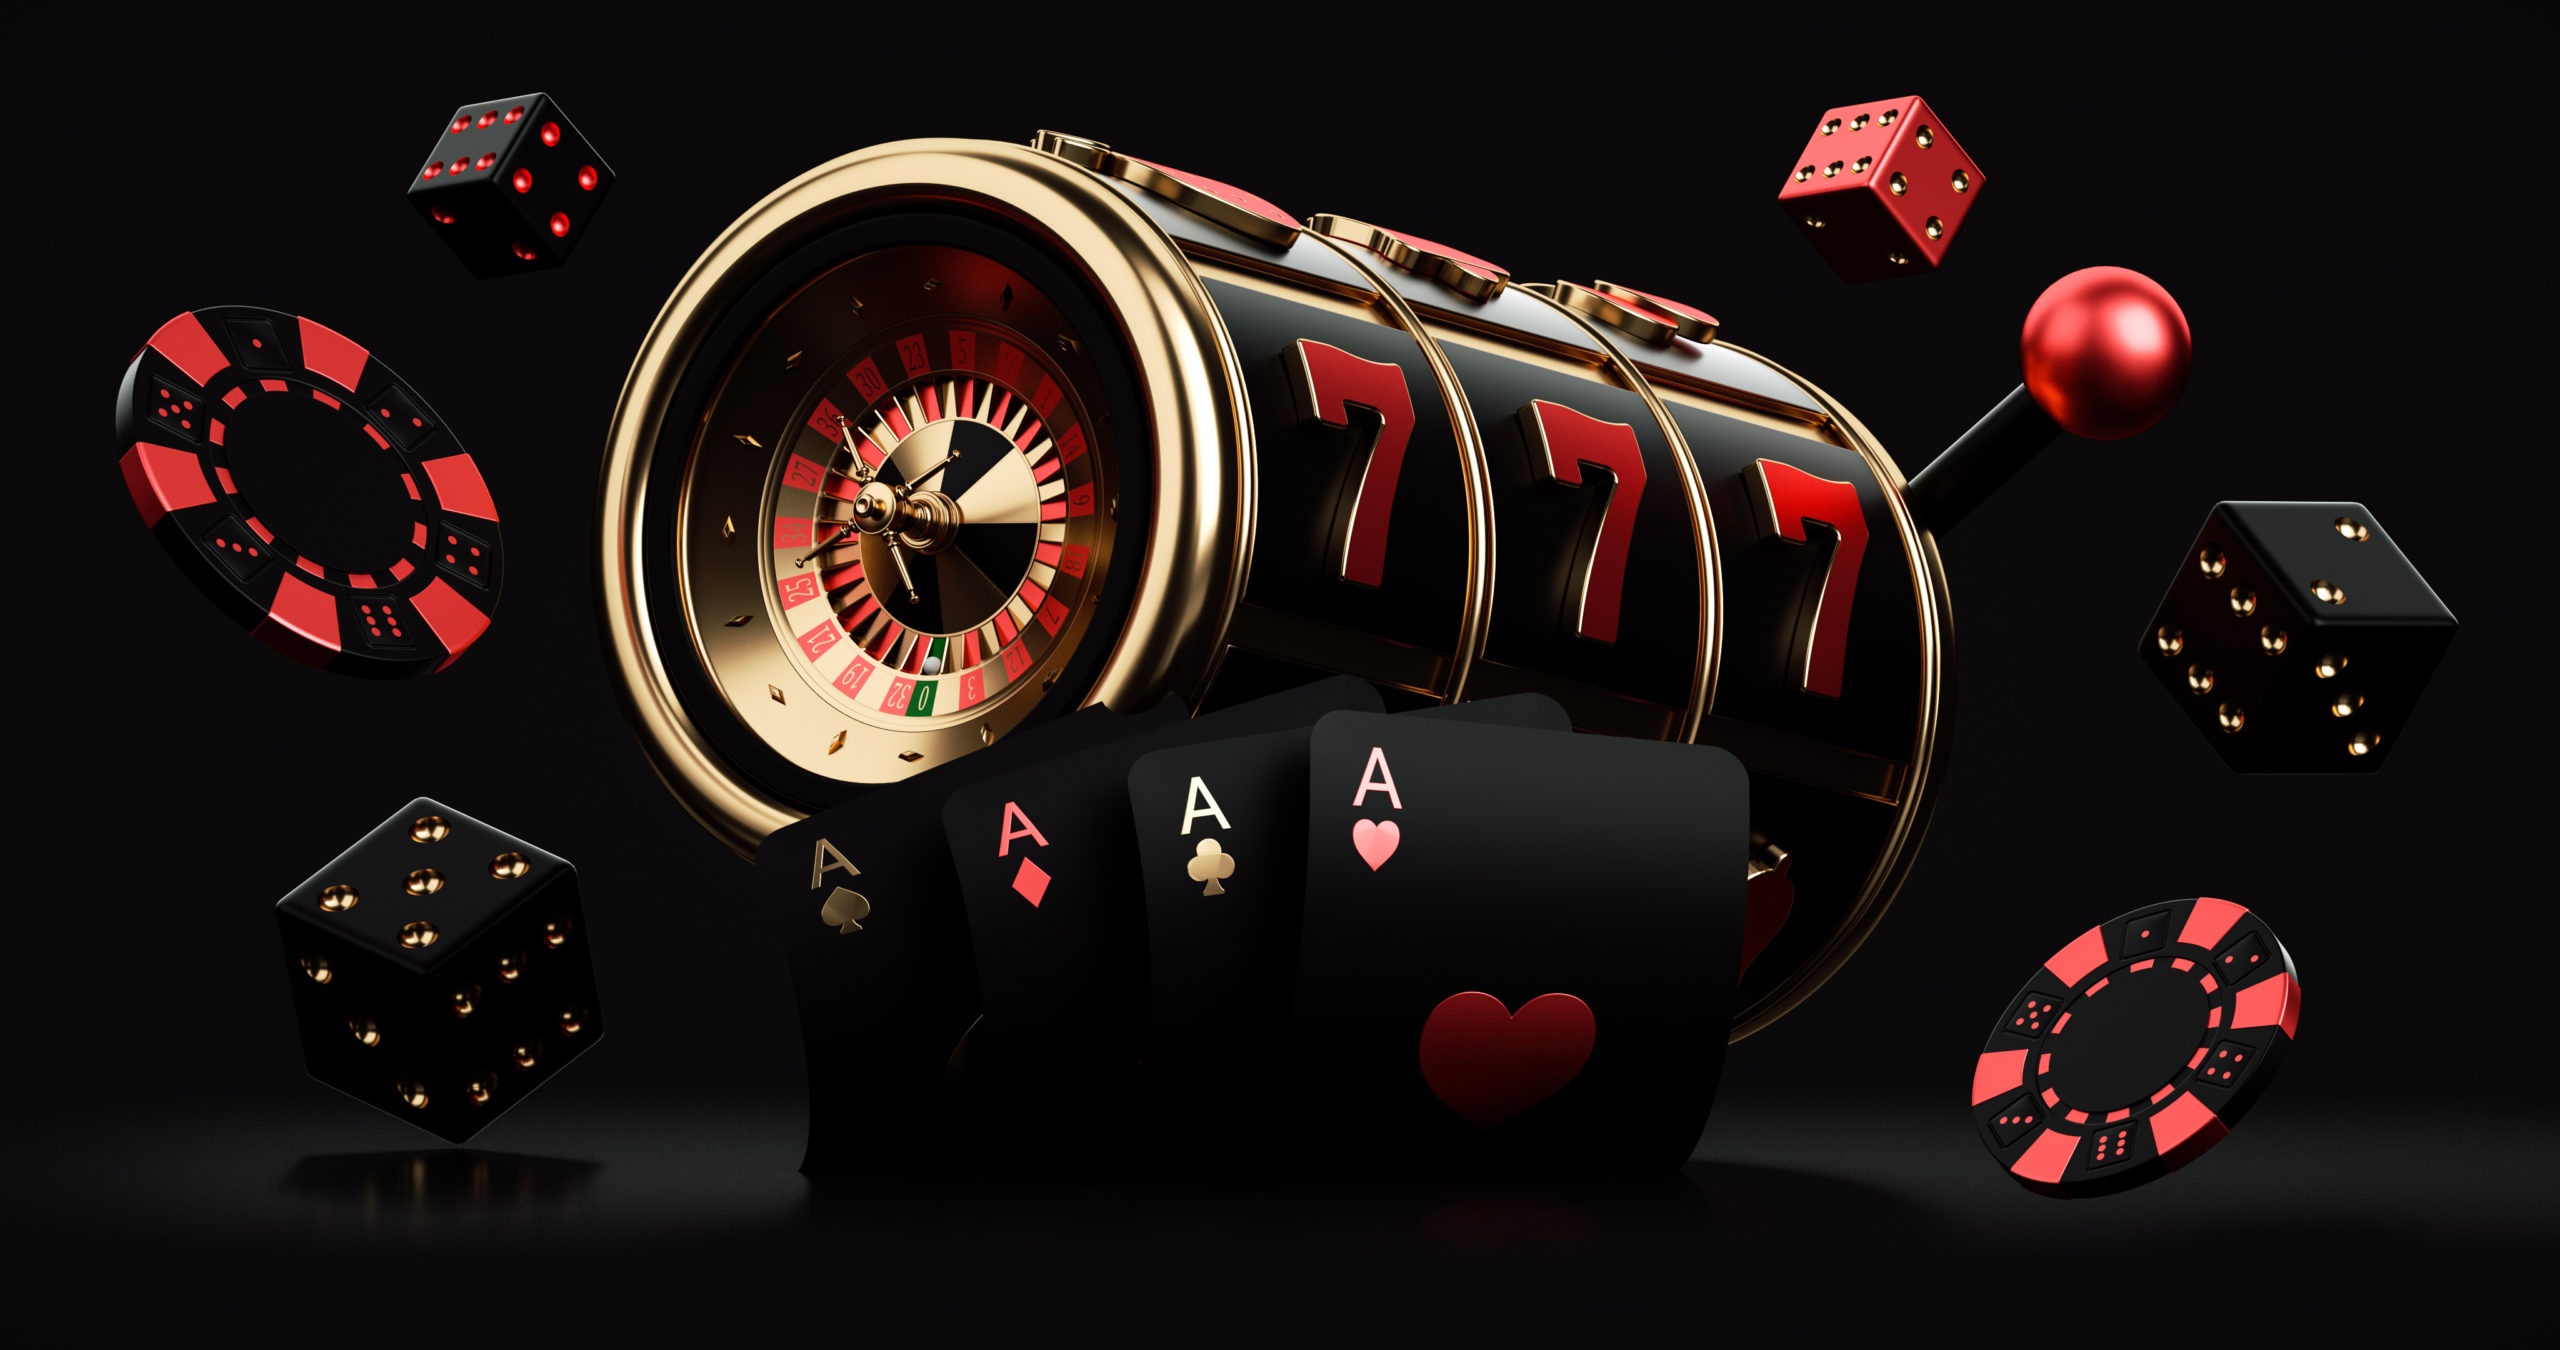 Maximizing your winnings with slot machine strategies